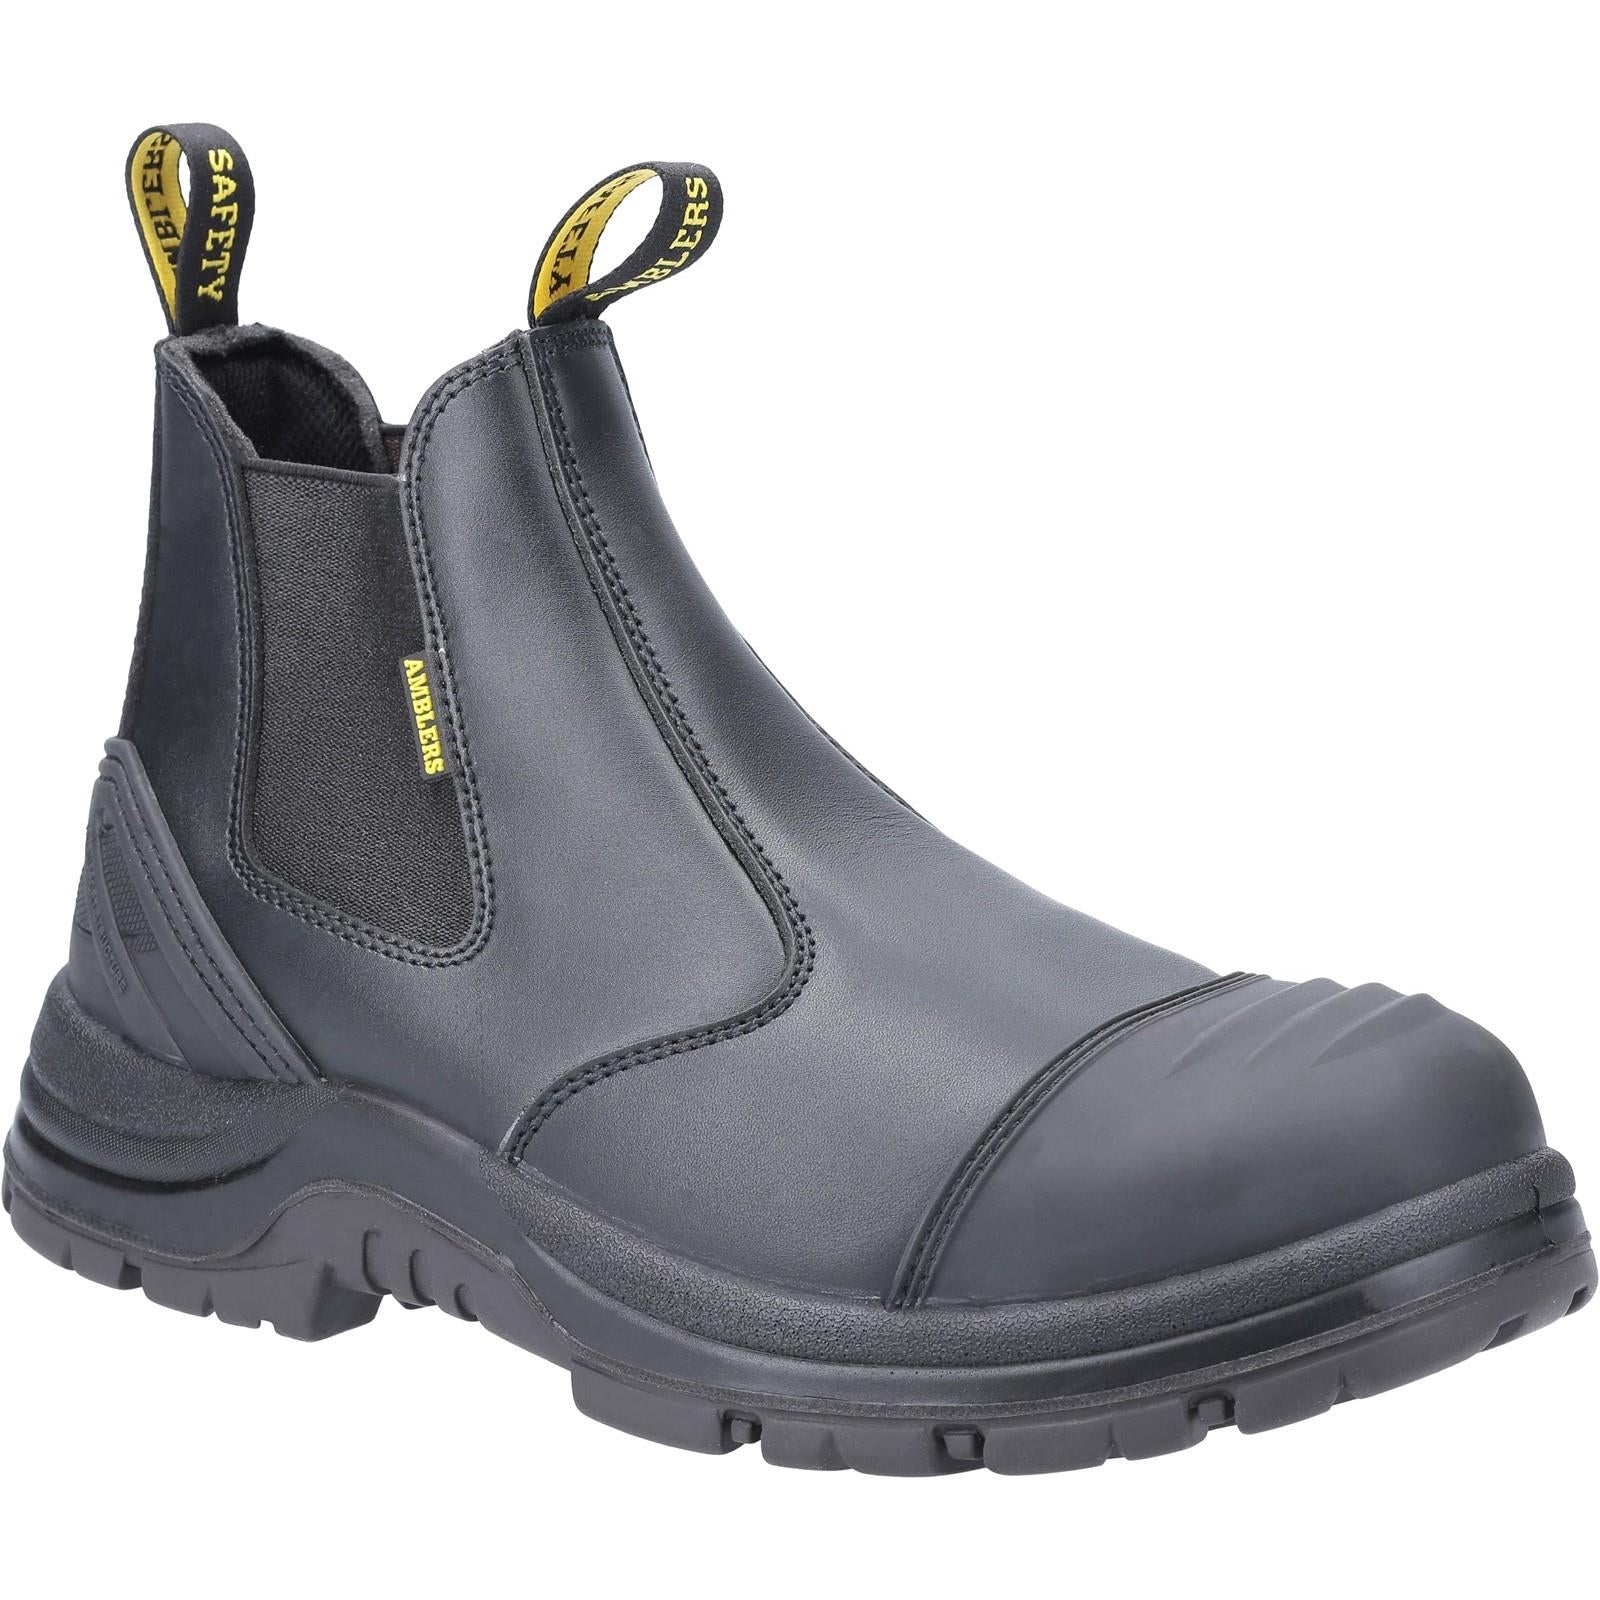 Amblers S3 black composite toe/midsole safety dealer work boot #AS306C